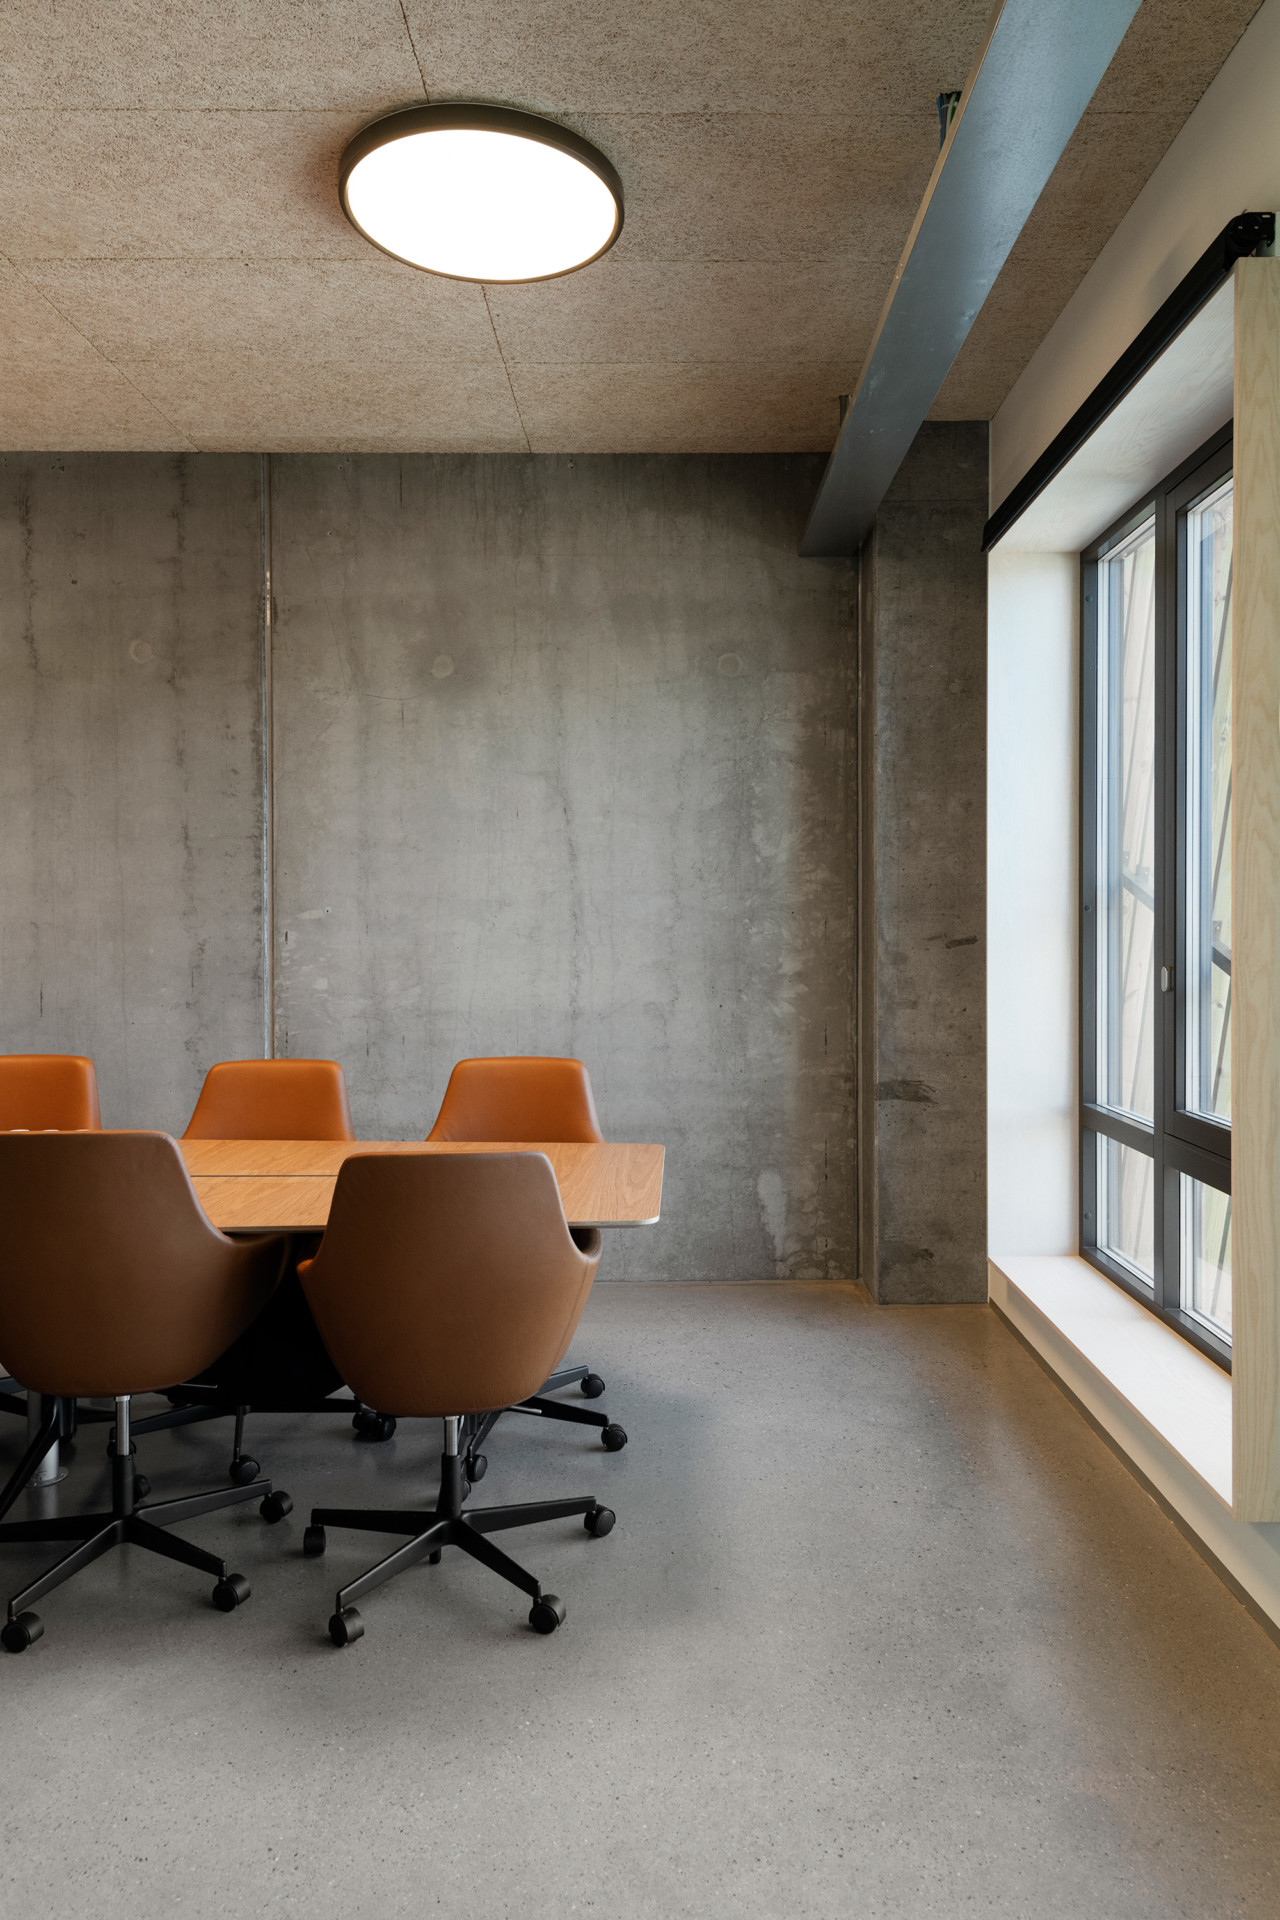 A stark powerhouse meeting room with concrete floor